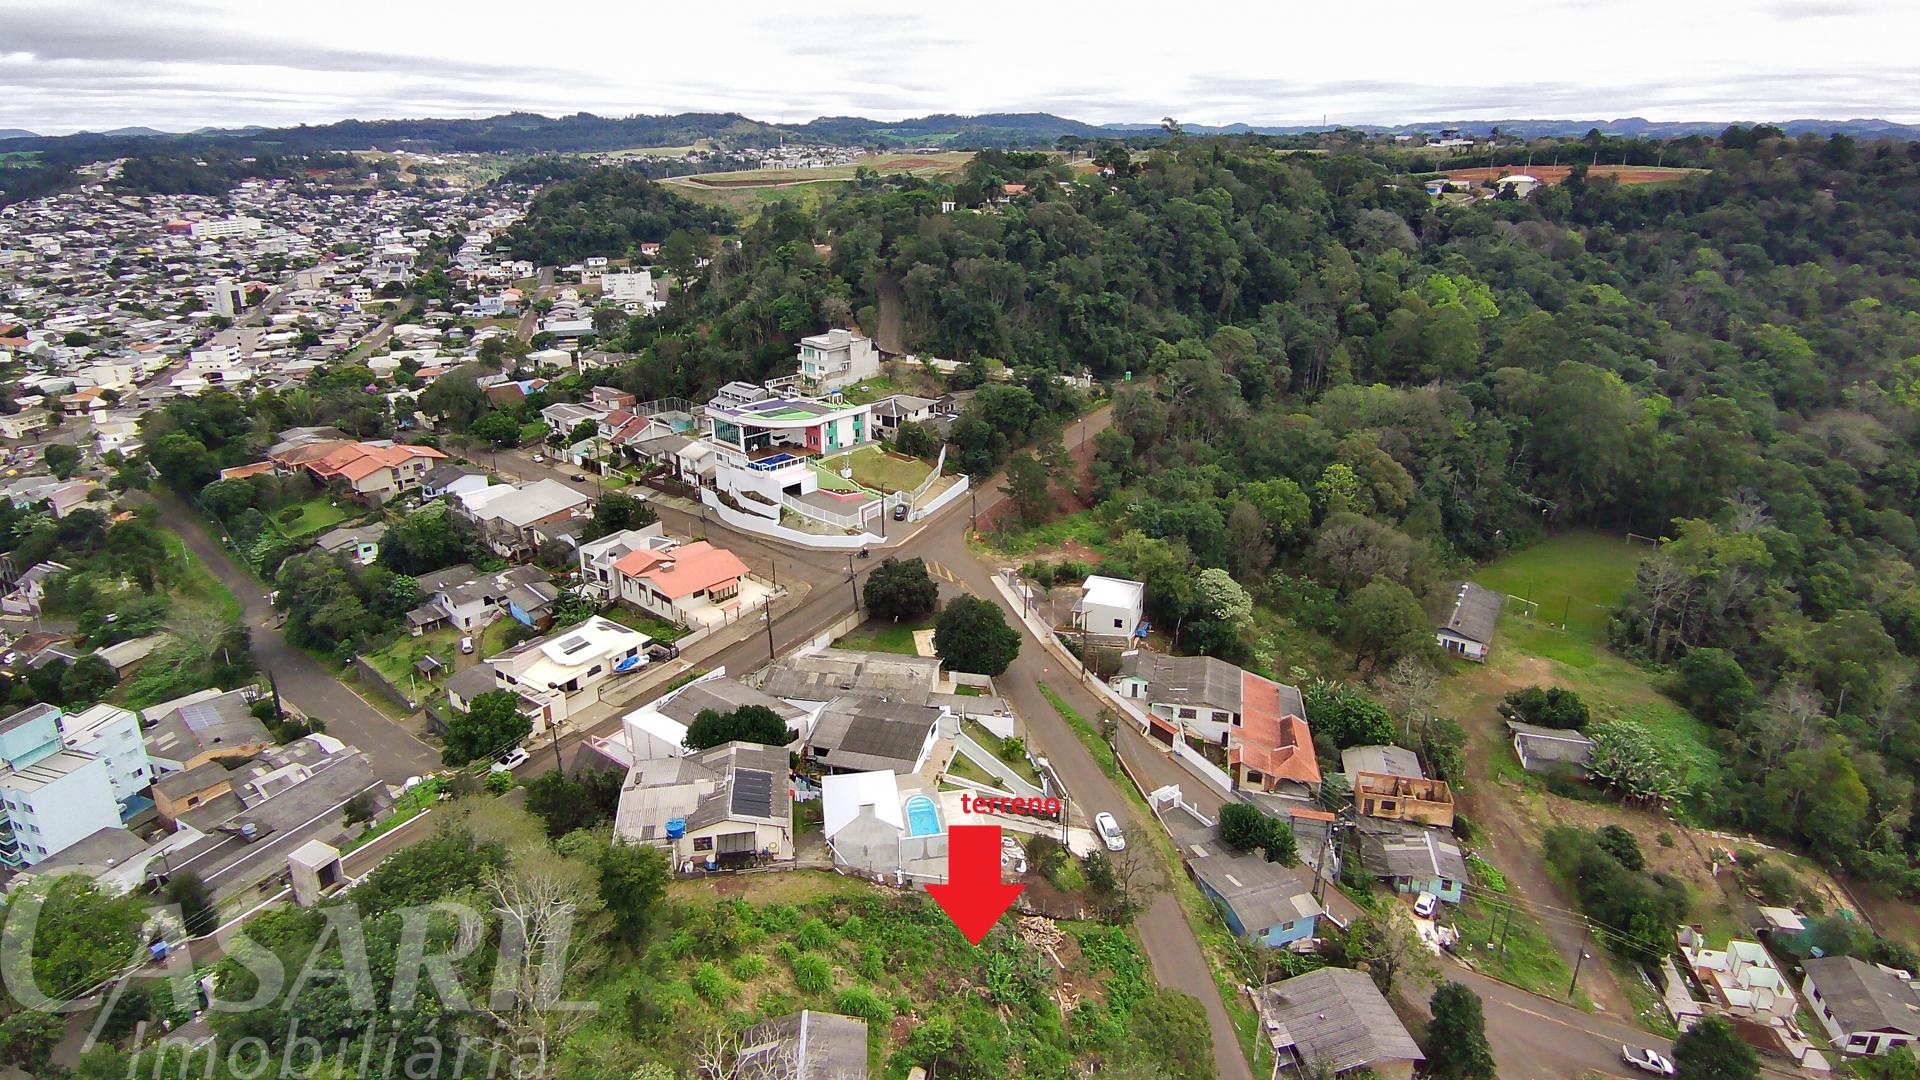 Investimento  Terreno À Venda No Bairro Guanabara Em Francisco Beltrao - Pr